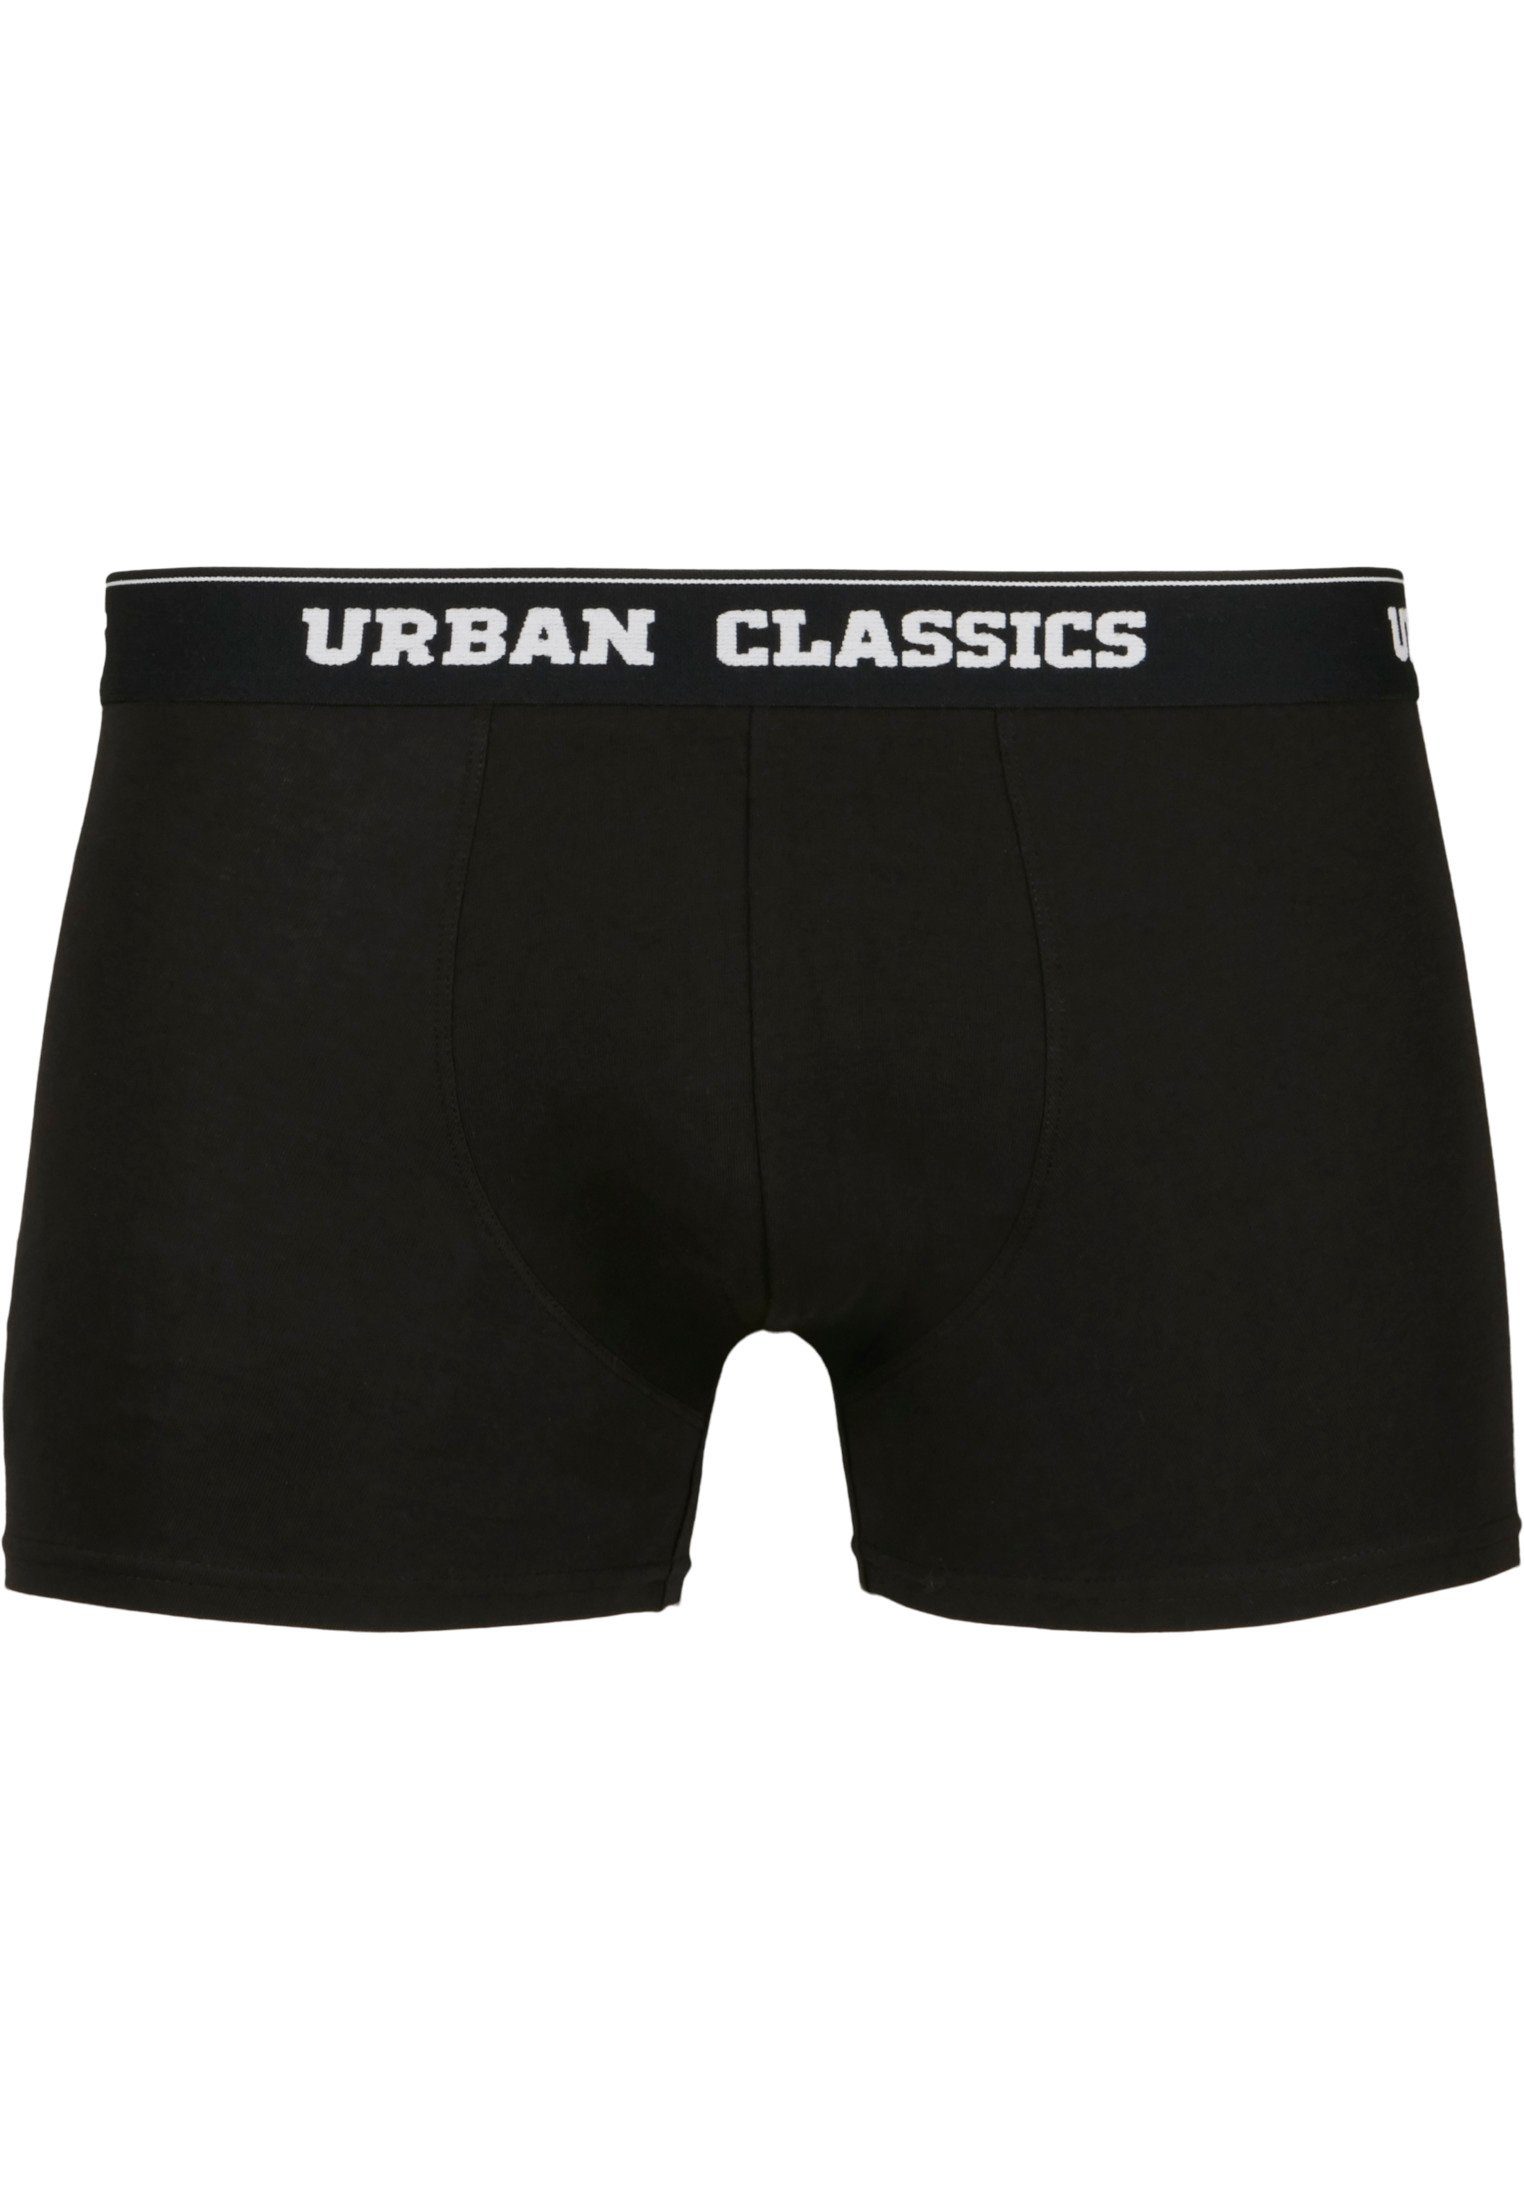 Wäsche/Bademode Boxershorts URBAN CLASSICS Boxer Boxer Shorts 3er-Pack -3538-